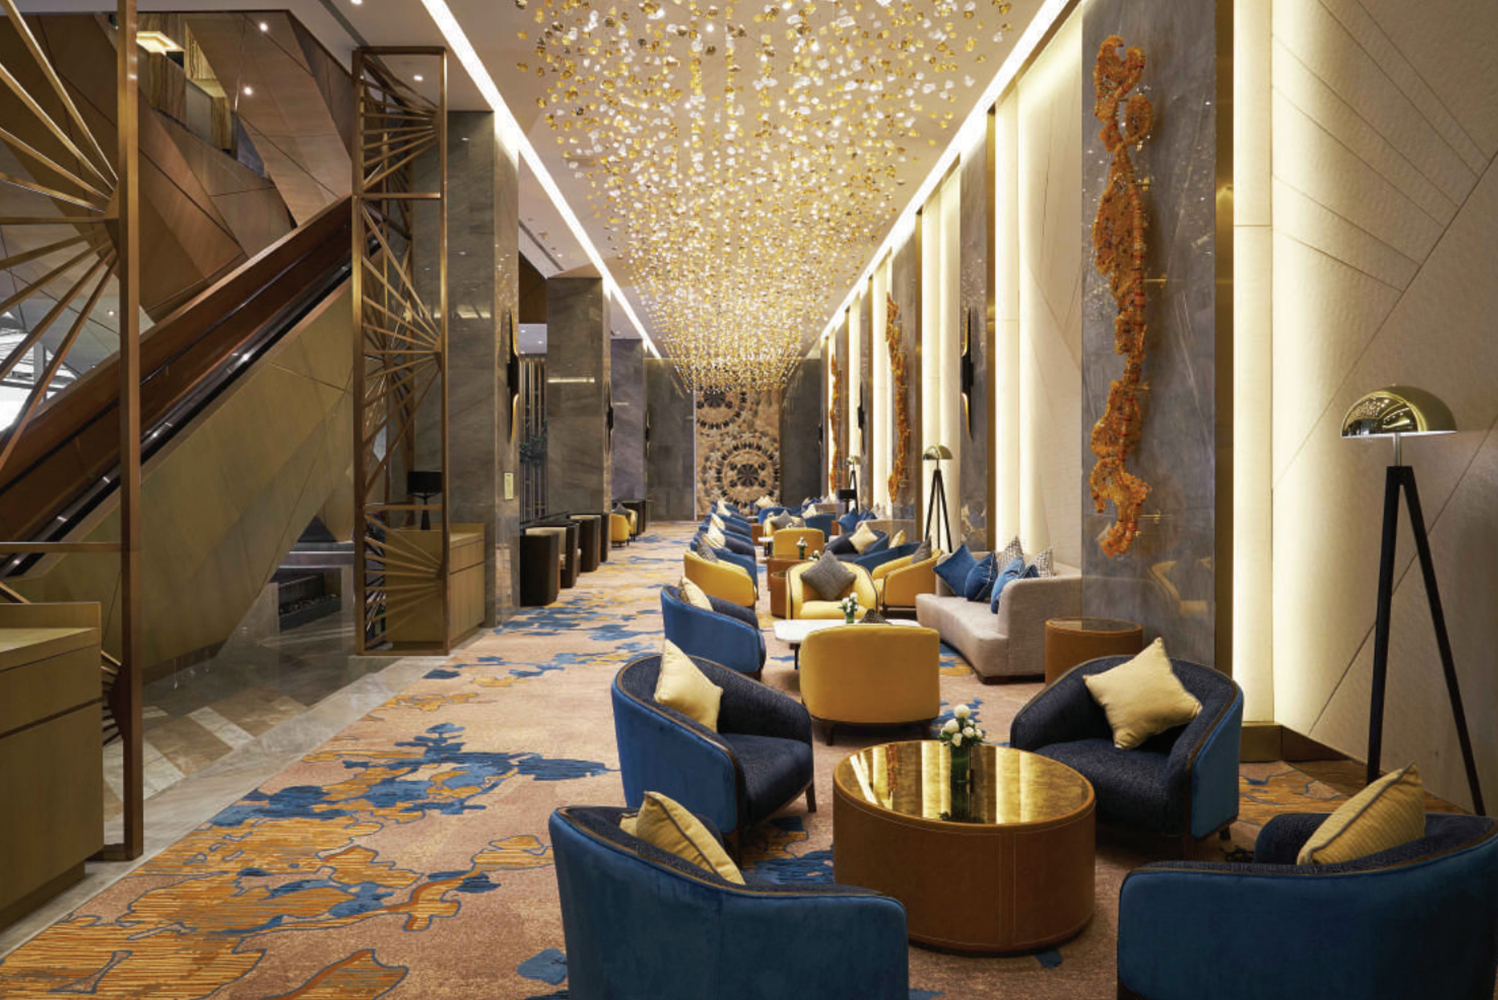 Hilton Resorts World Manila opened within Metro Manilas largest integrated resort